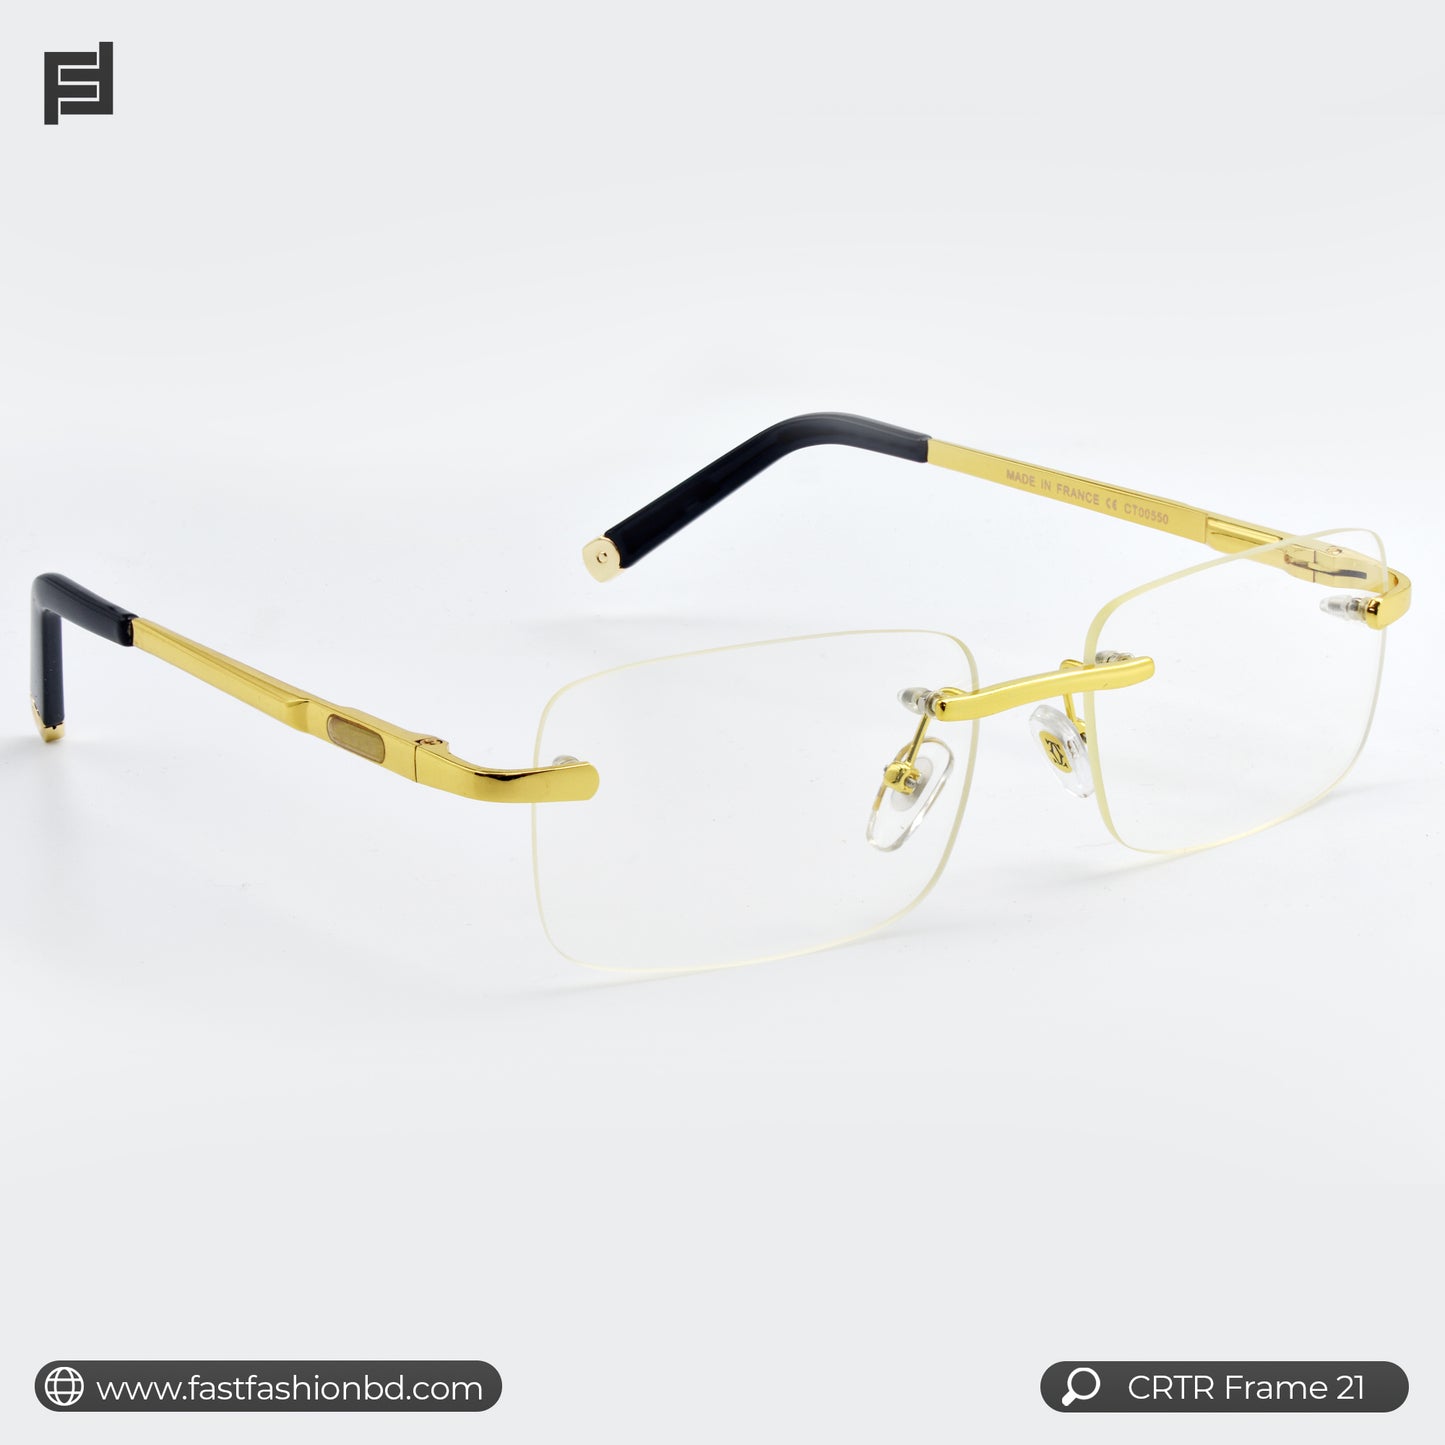 Modern Looking Trendy Stylish Rimless Optic Frame | CRTR Frame 21